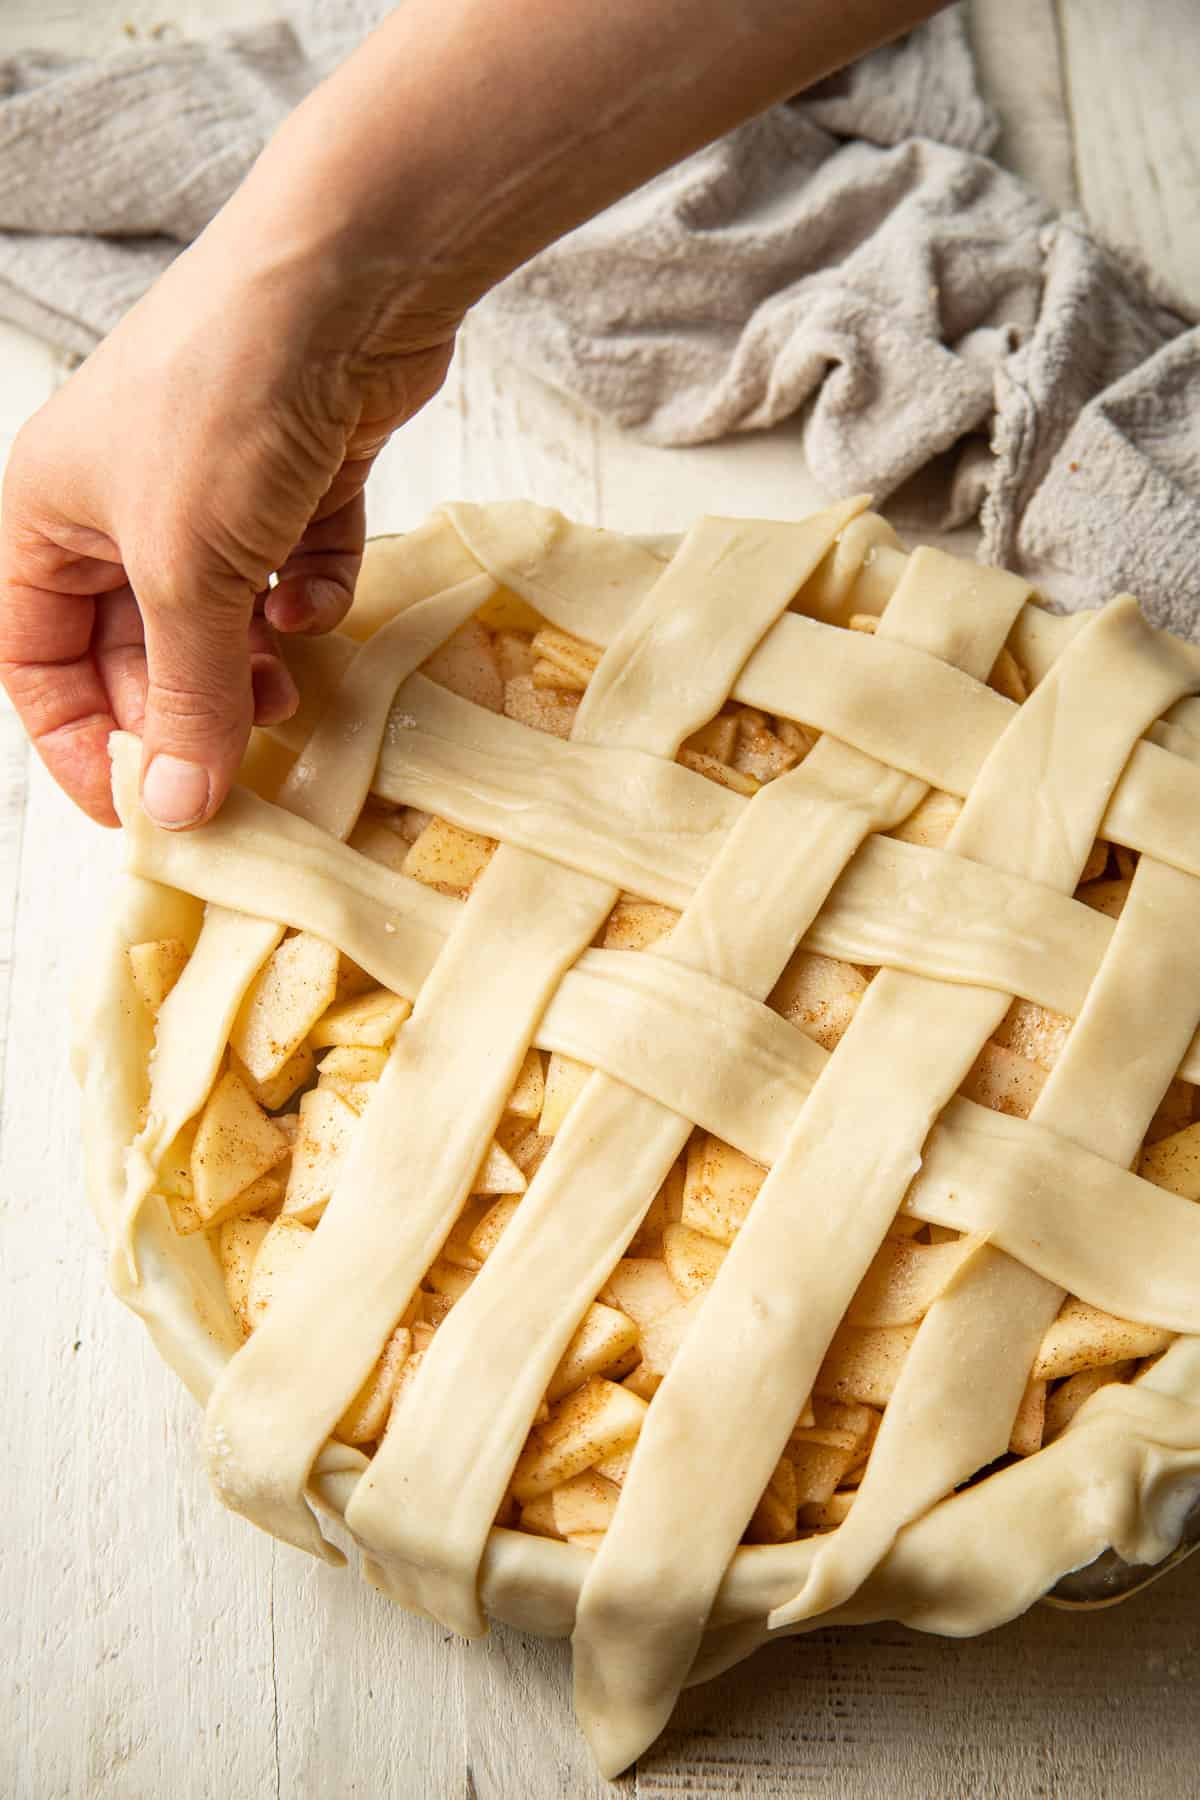 Hands arranging pie crust strips in a lattice formation.